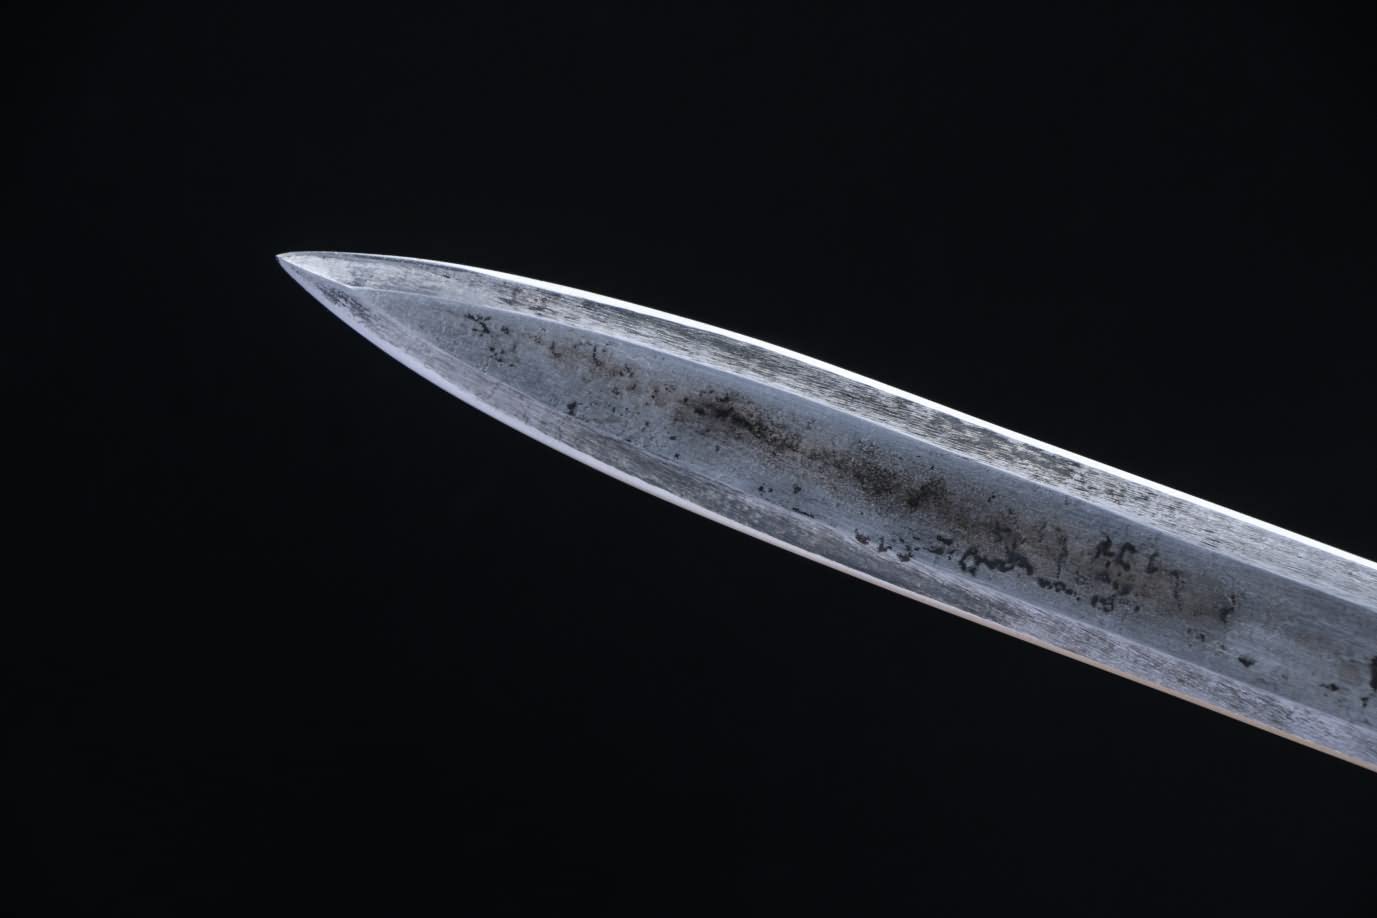 Han jian swords Real,Spring Steel Blade,Alloy Fittings,Black Wood Scabbard,chinese sword